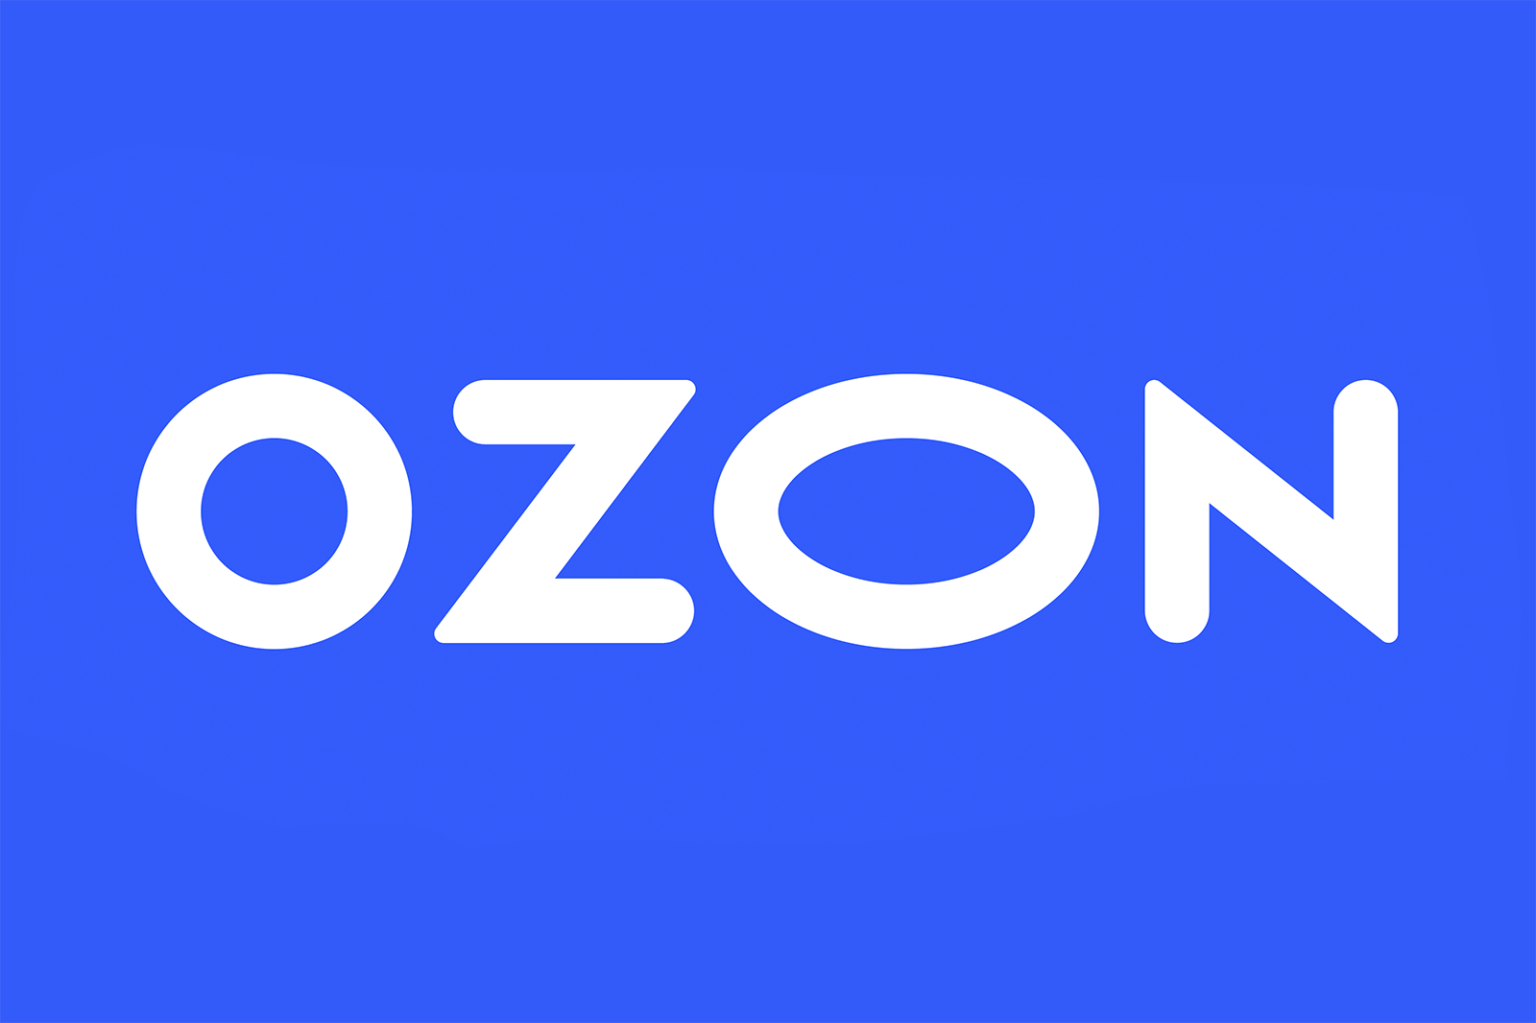 Озон логотип. Магазин Озон логотип. Щ зон. Надпись Озон. Брянск купить на озоне